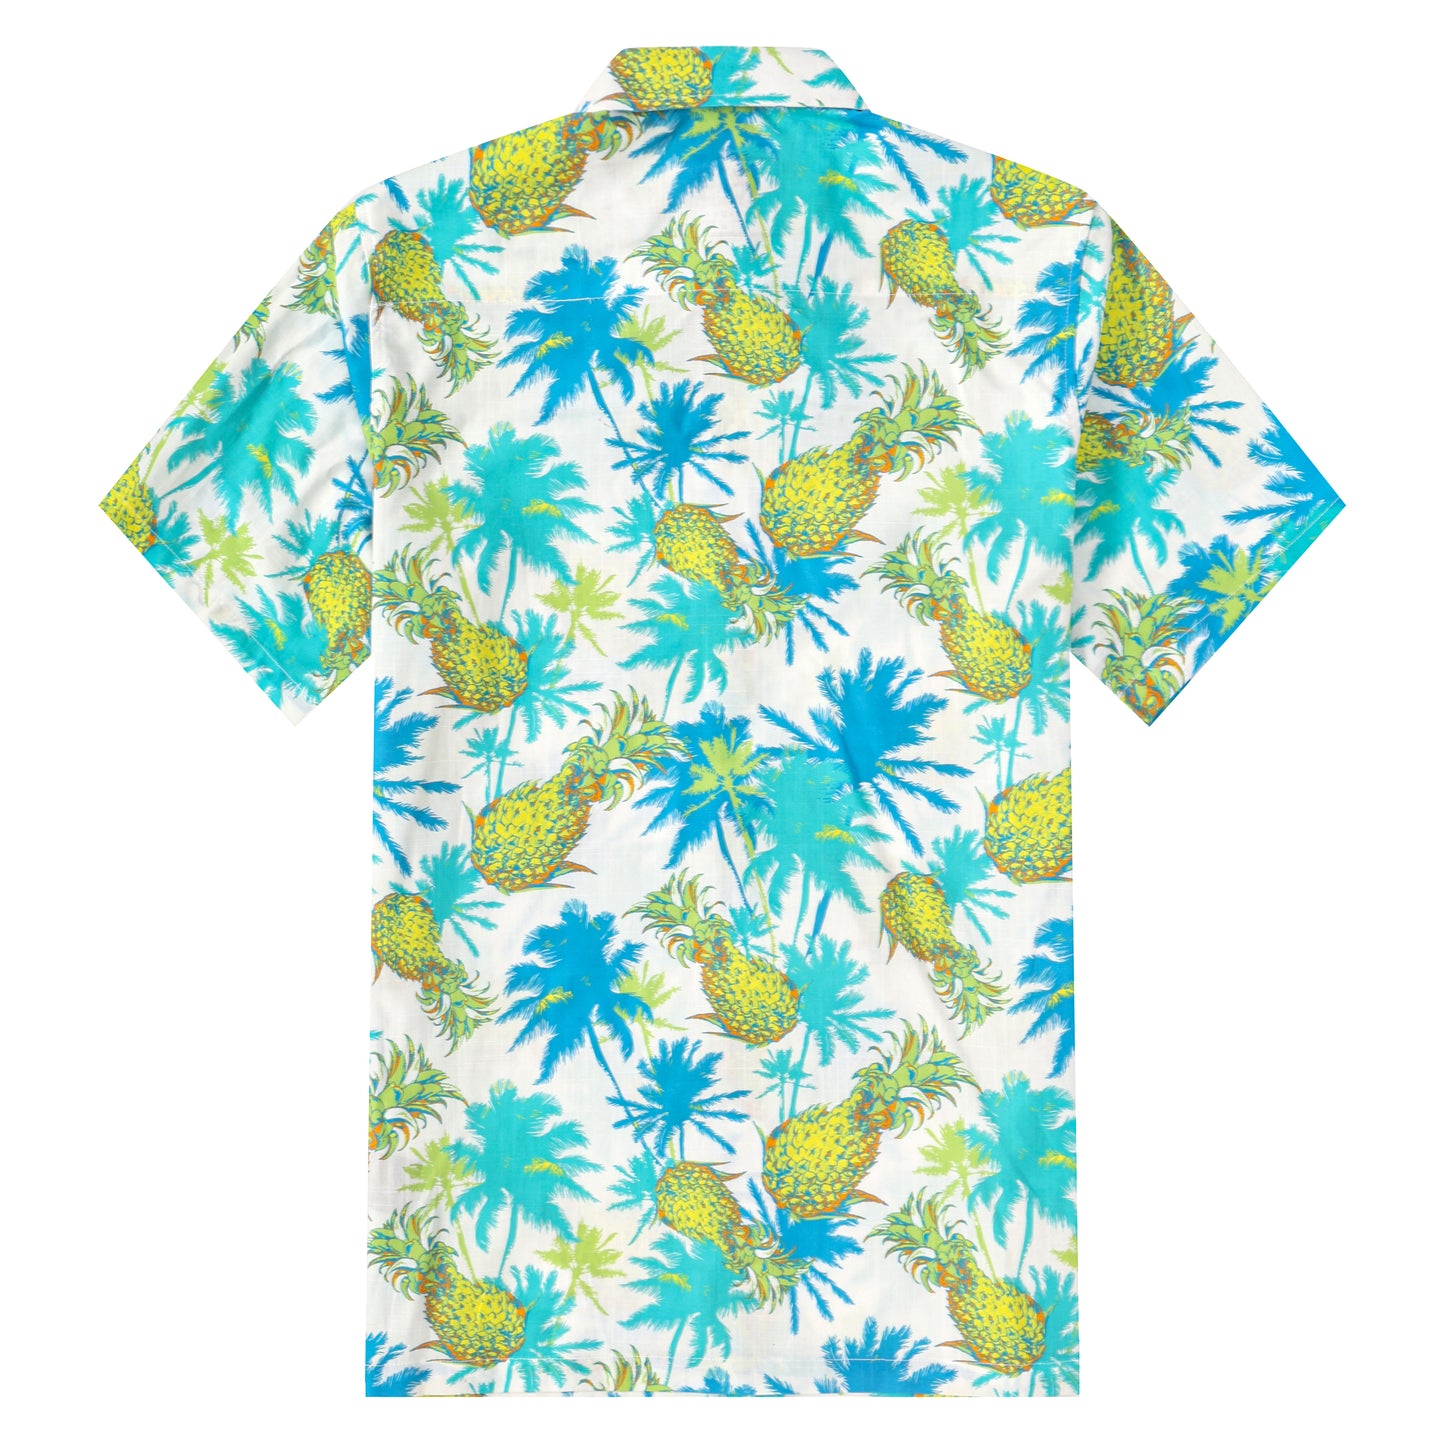 Tropical Pineapple Pattern Button Short Sleeve Shirt